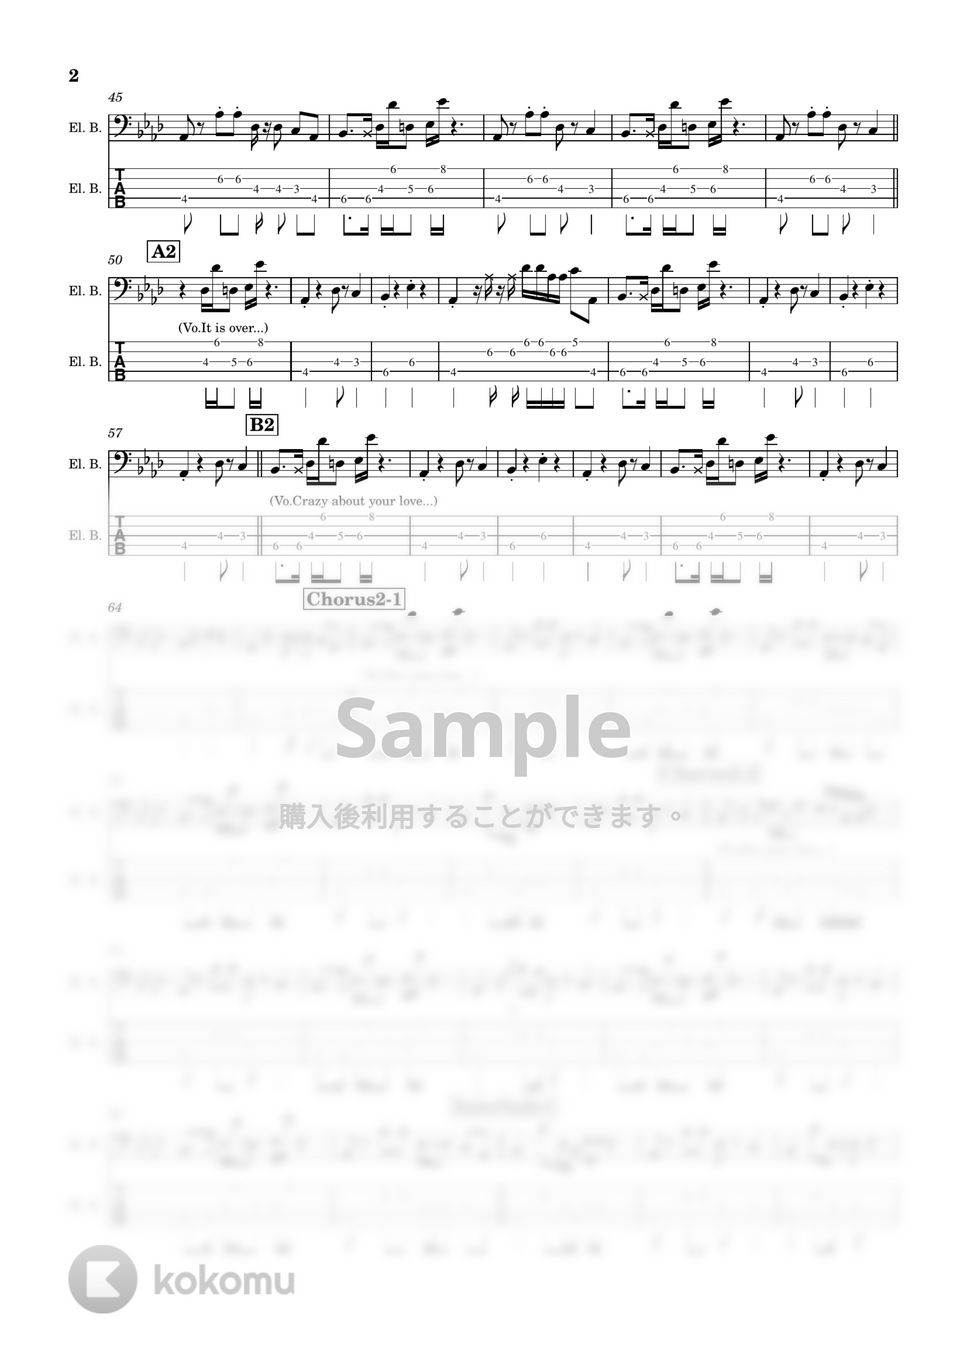 LUCKY TAPES - GUN(5弦Ver.) (ベース/TAB/LUCKY TAPES) by TARUO's_Bass_Score